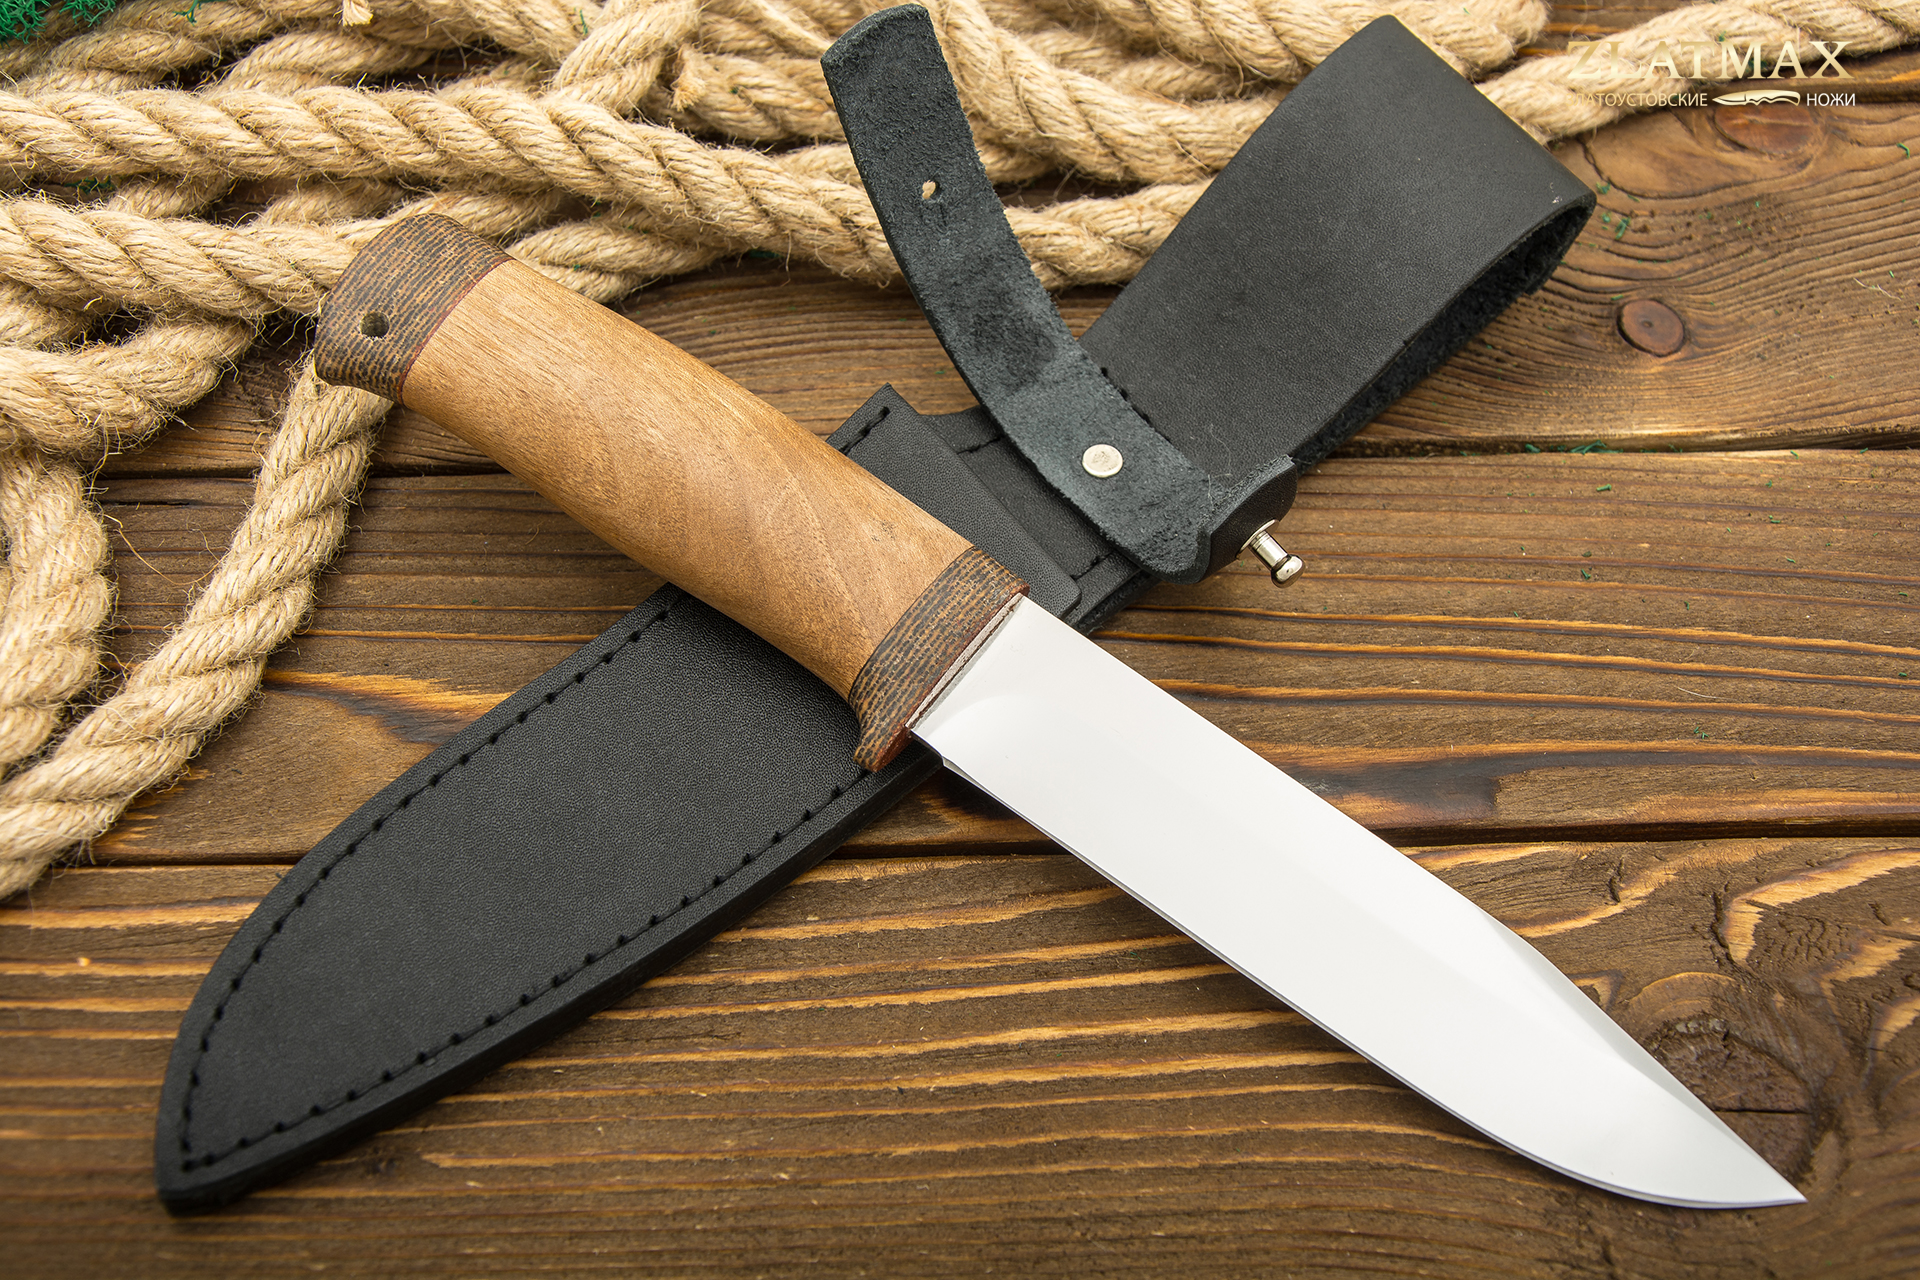 Нож Баджер-2 (95Х18, Орех, Текстолит)